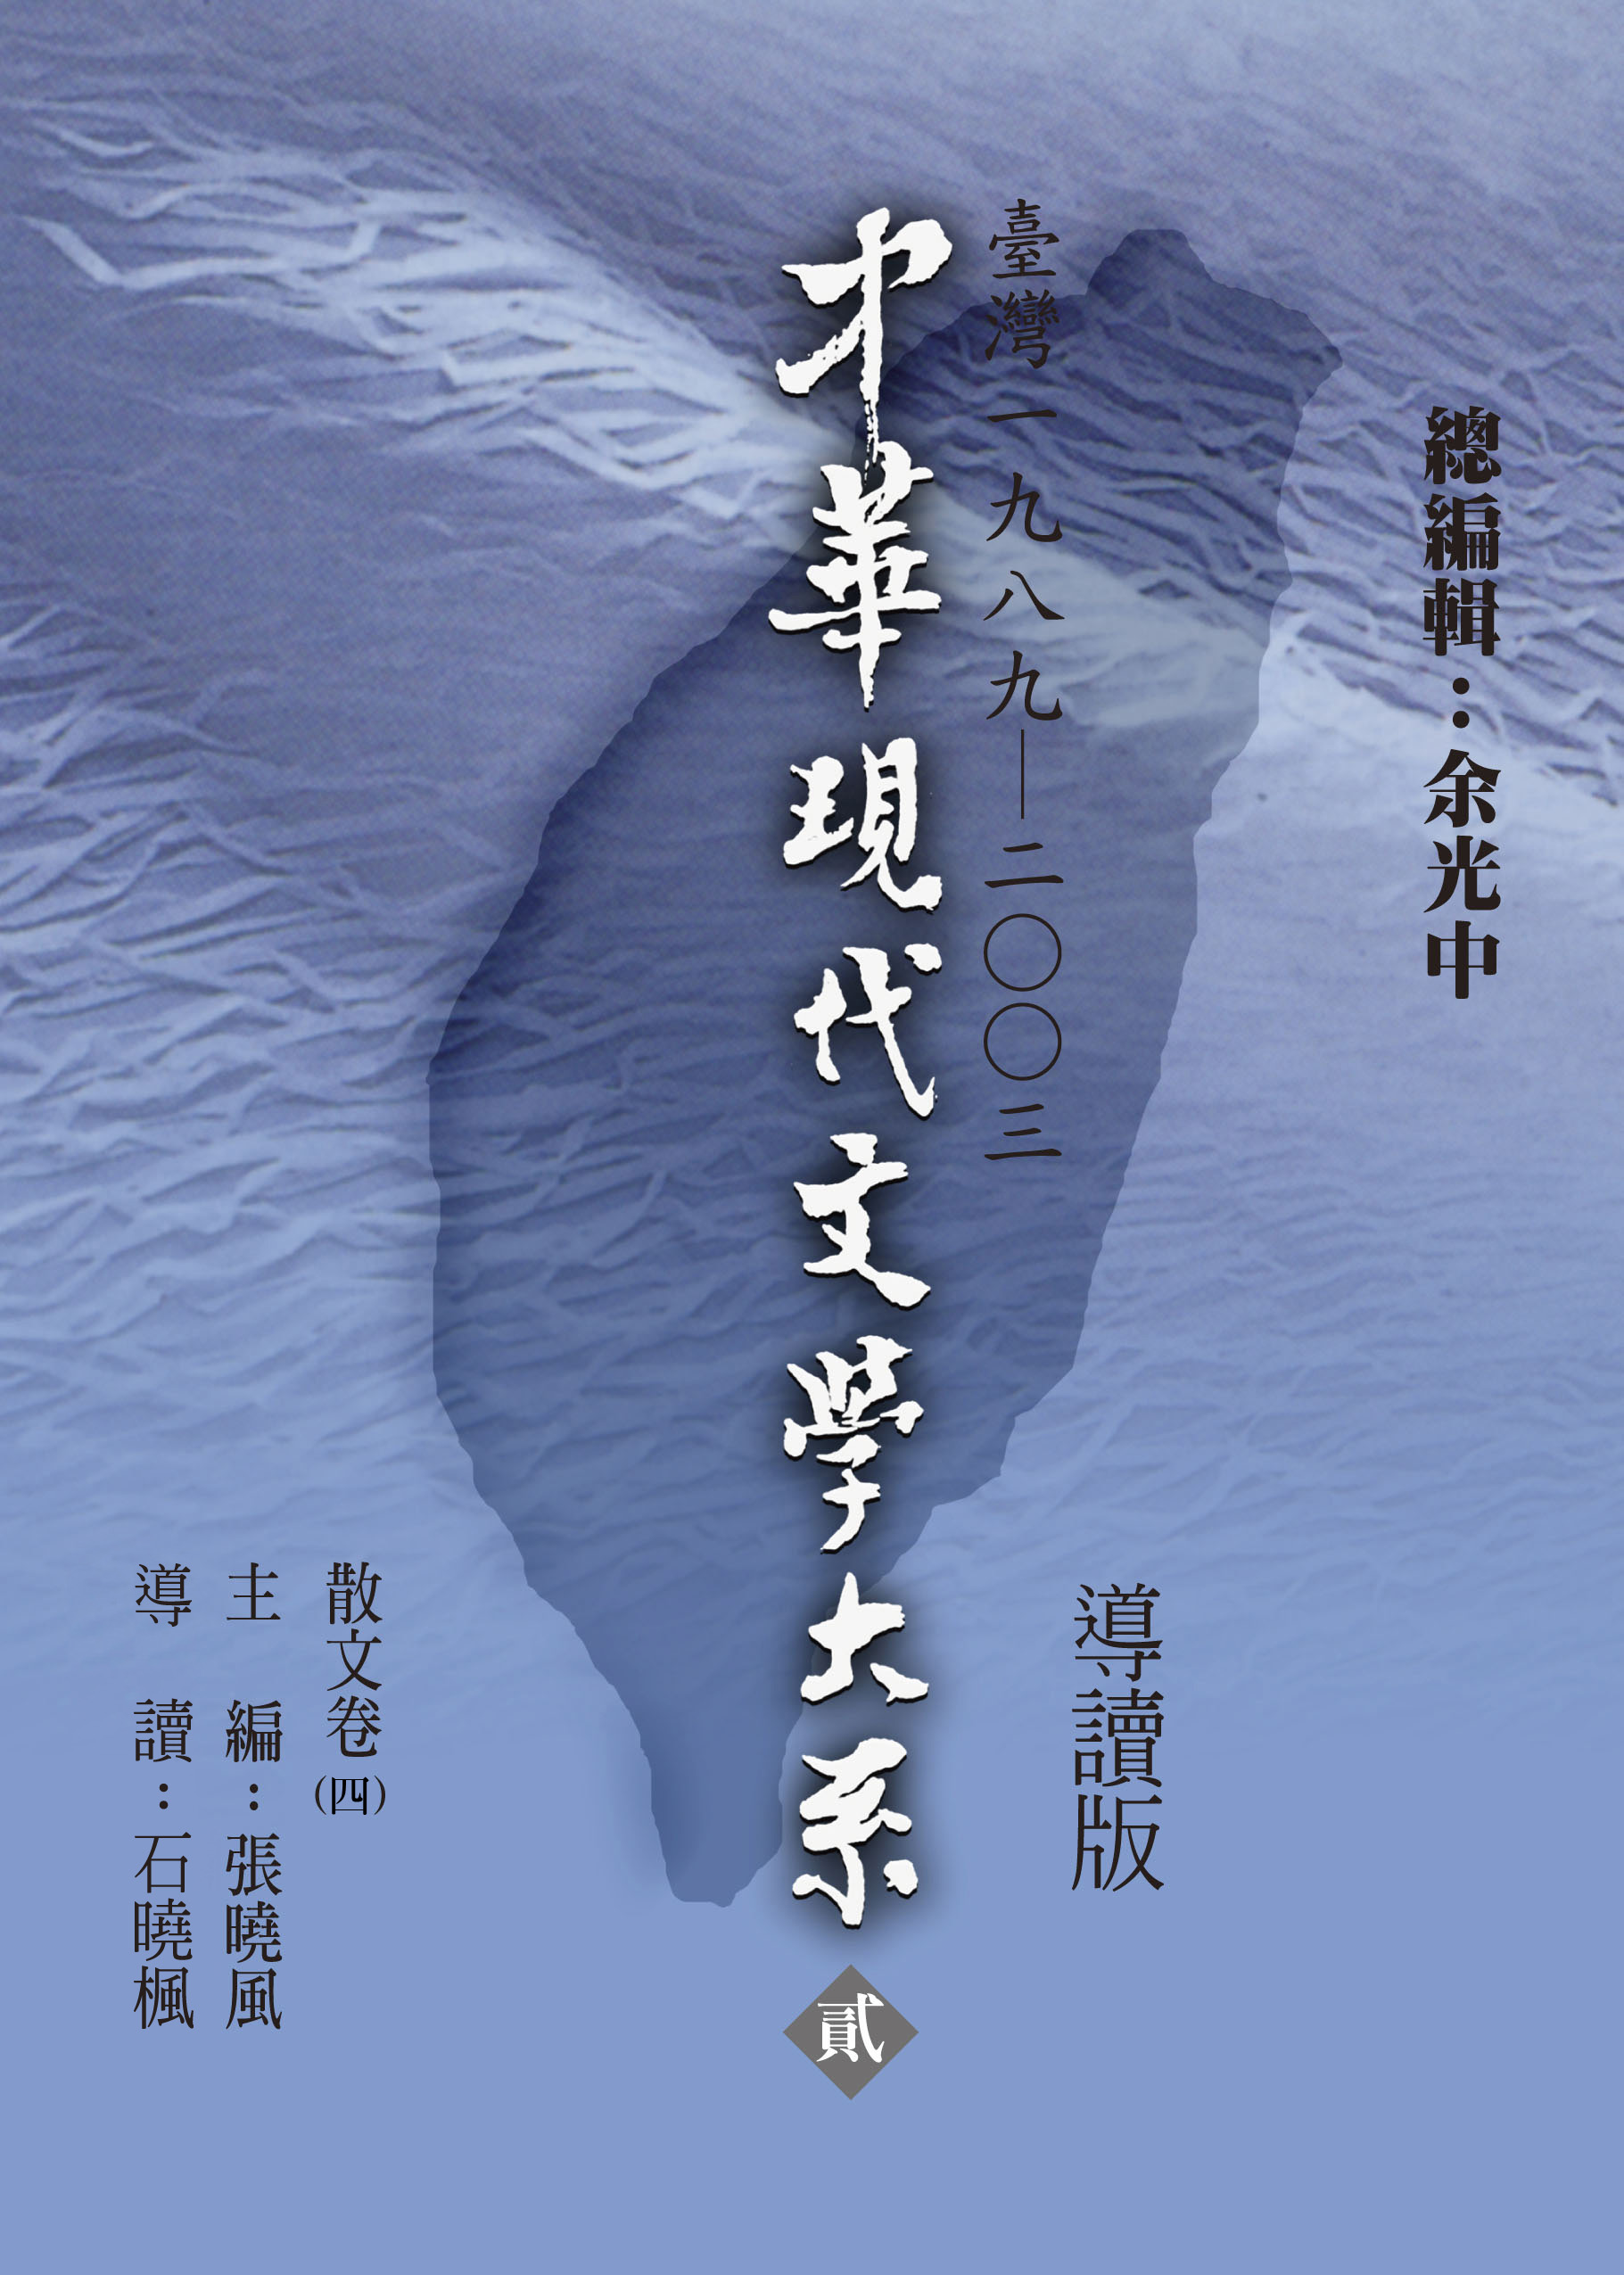 Kk026 中華現代文學大系二散文卷4